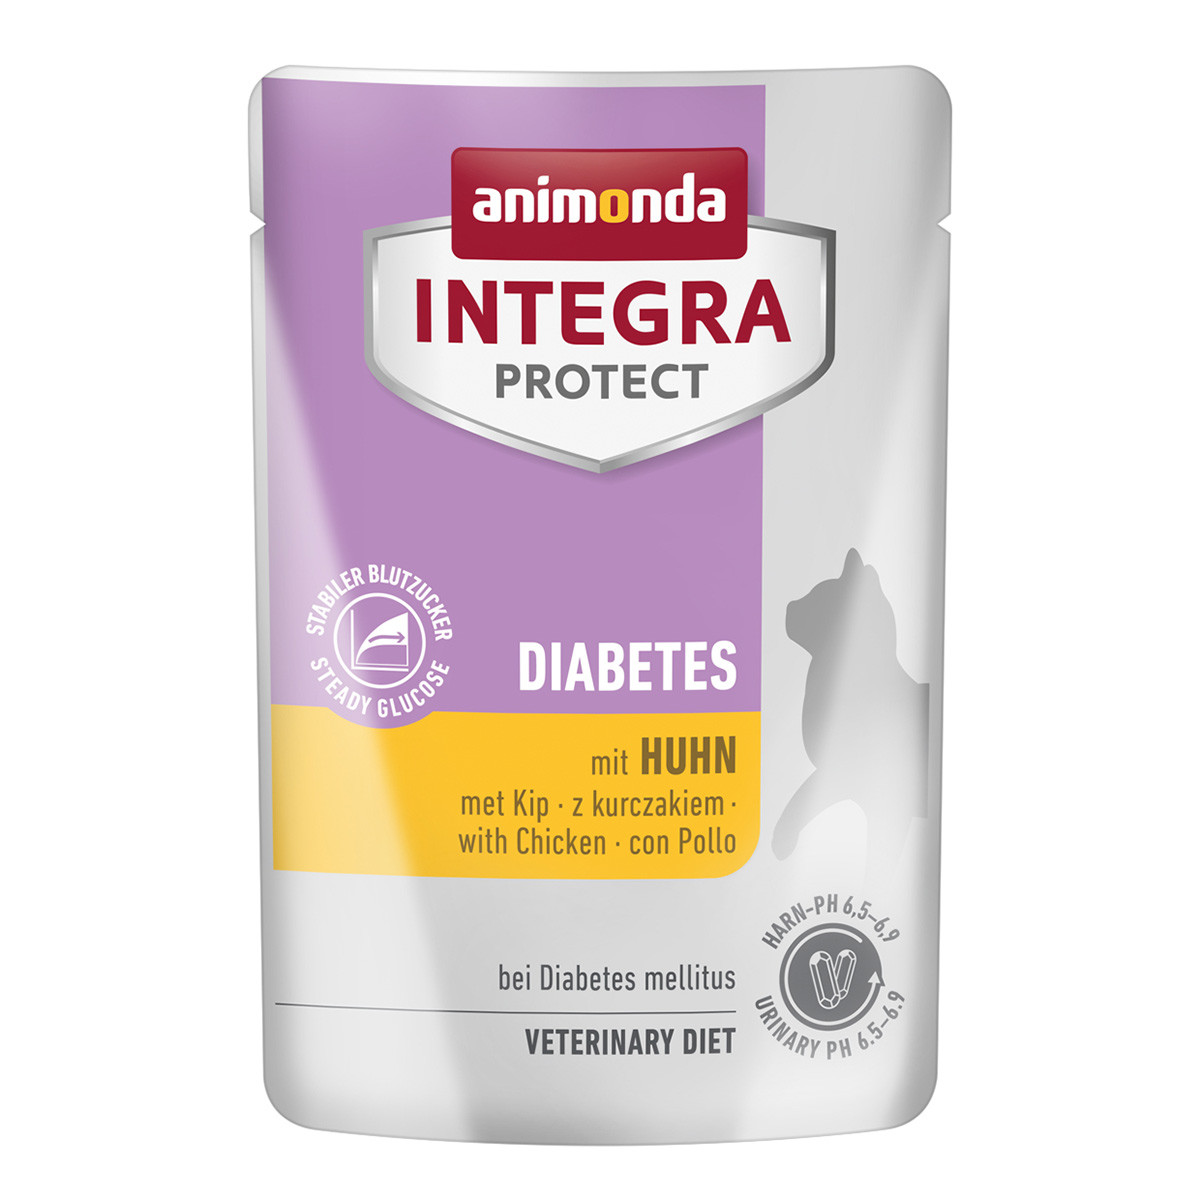 animonda INTEGRA PROTECT Diabetes Adult kuře 24× 85 g